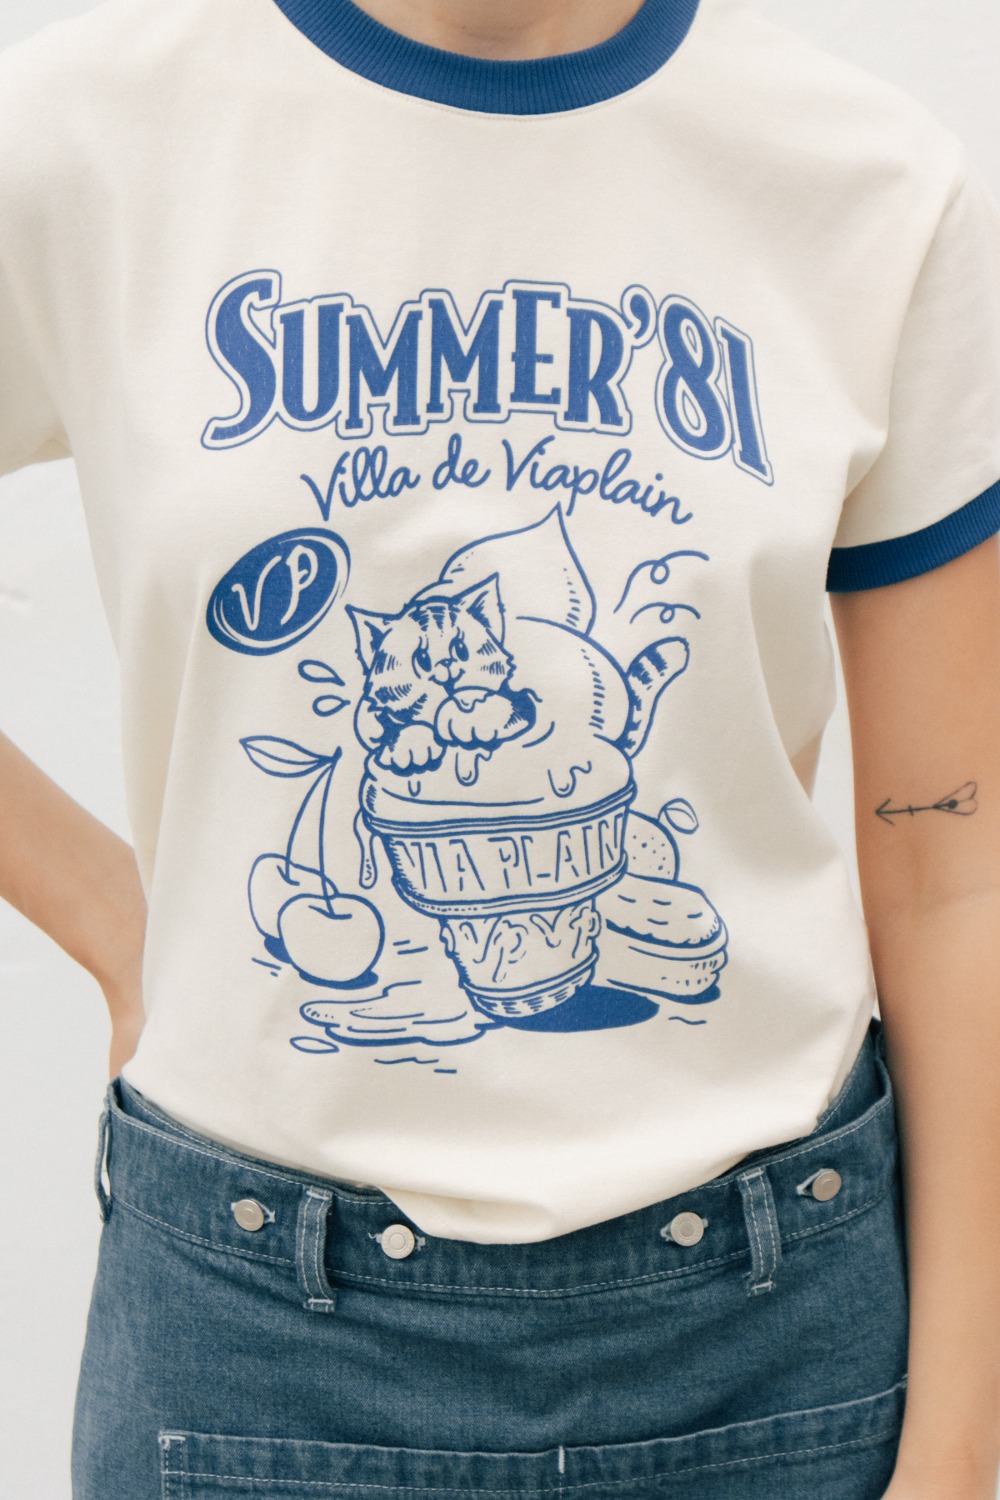 Via Summer&#039;81 T-shirt (ivory)